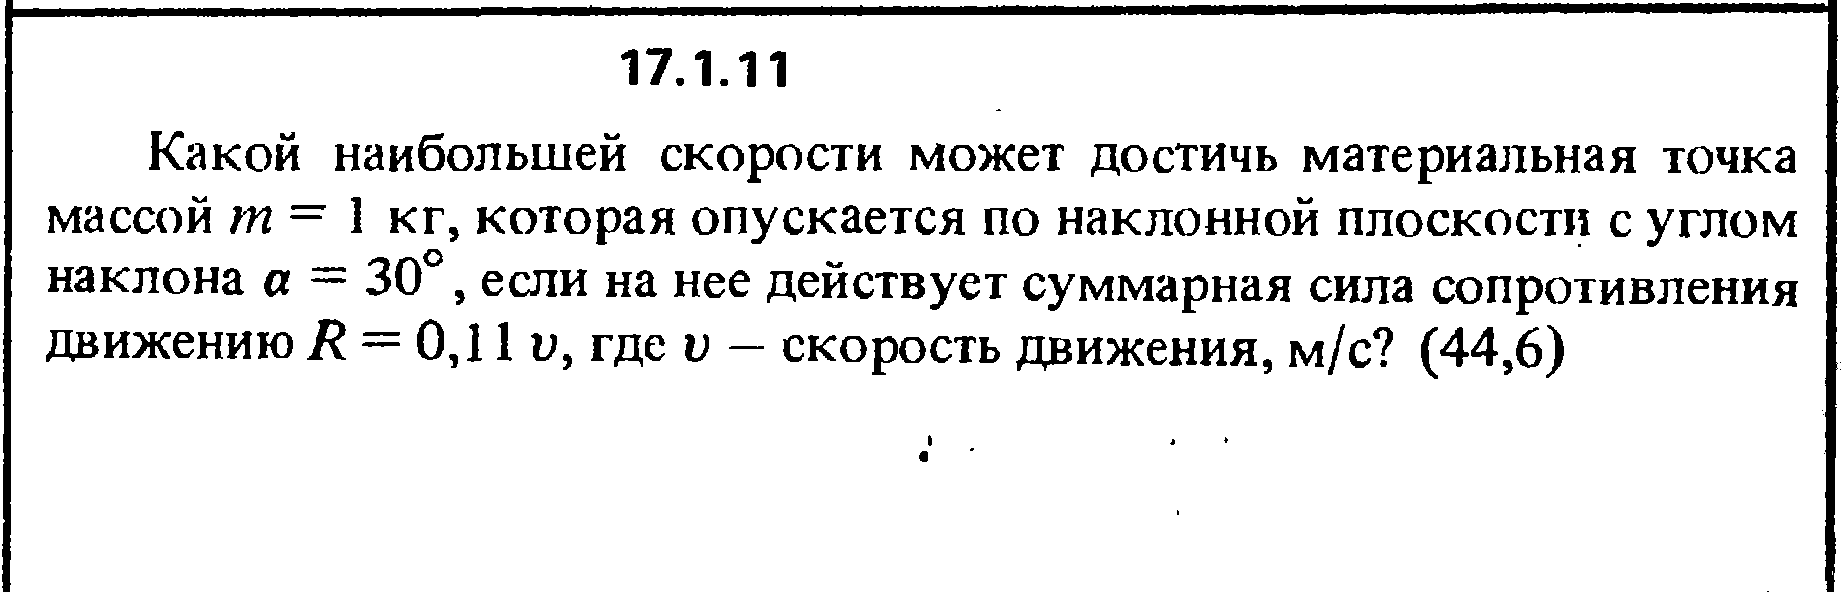 Решение задачи 17.1.11 из сборника Кепе О.Е. 1989 года